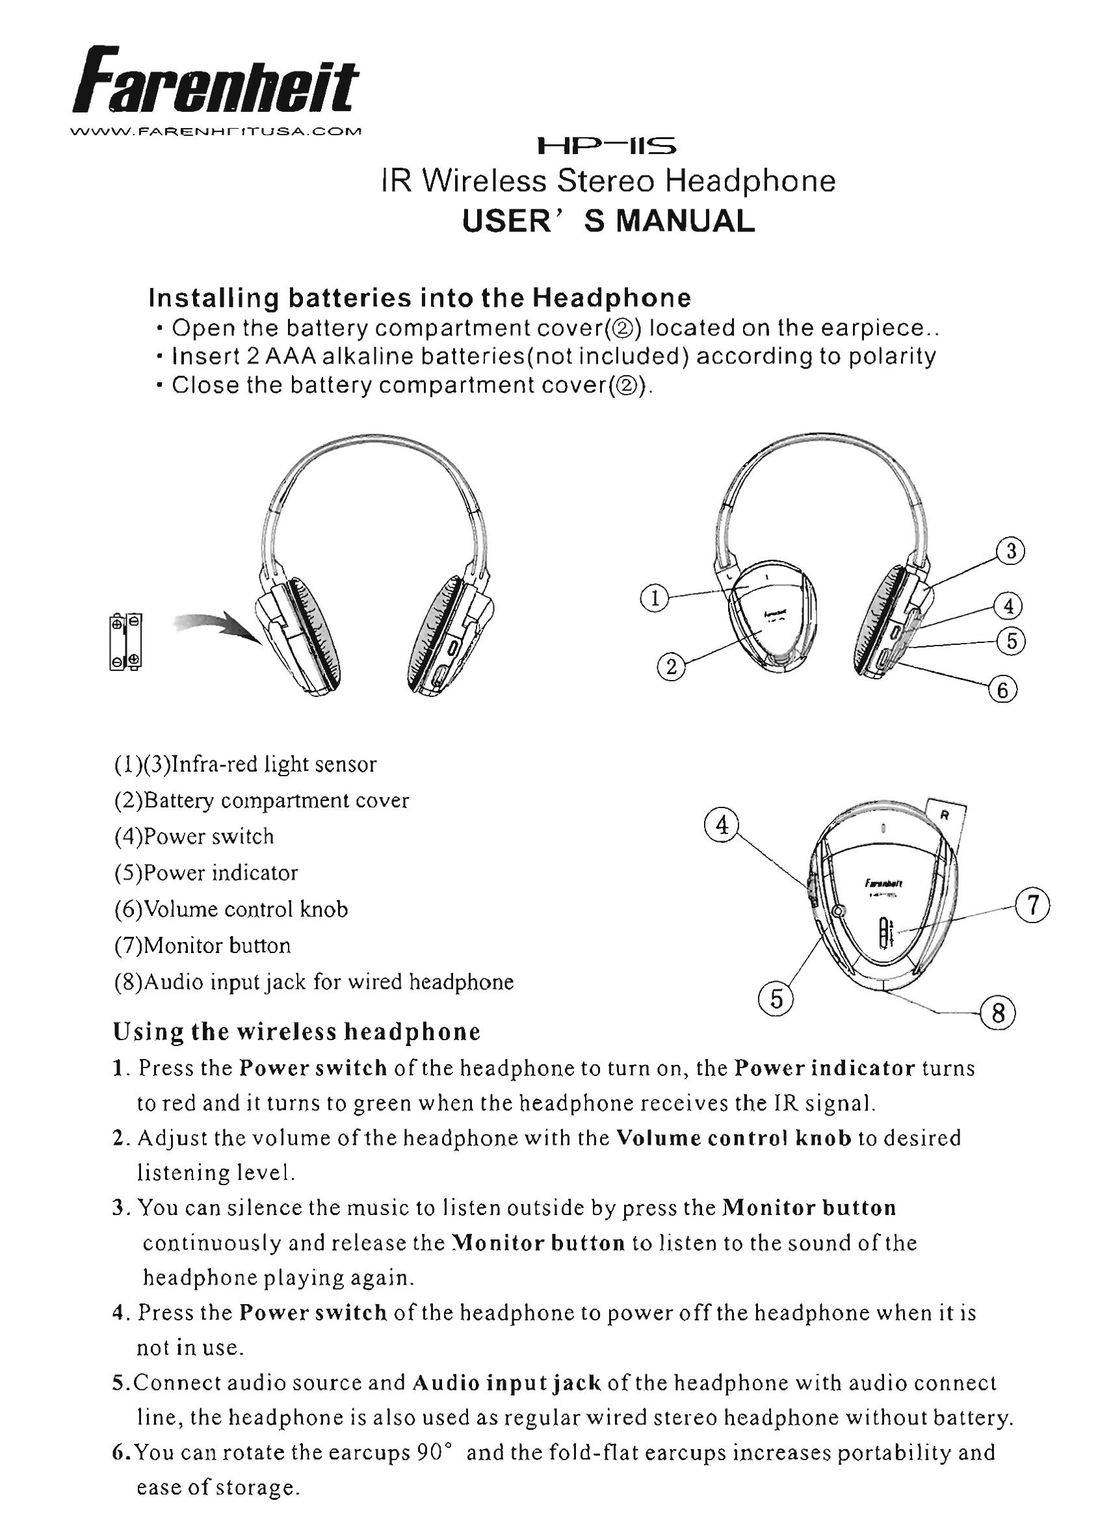 Farenheit Technologies HP-115 Headphones User Manual